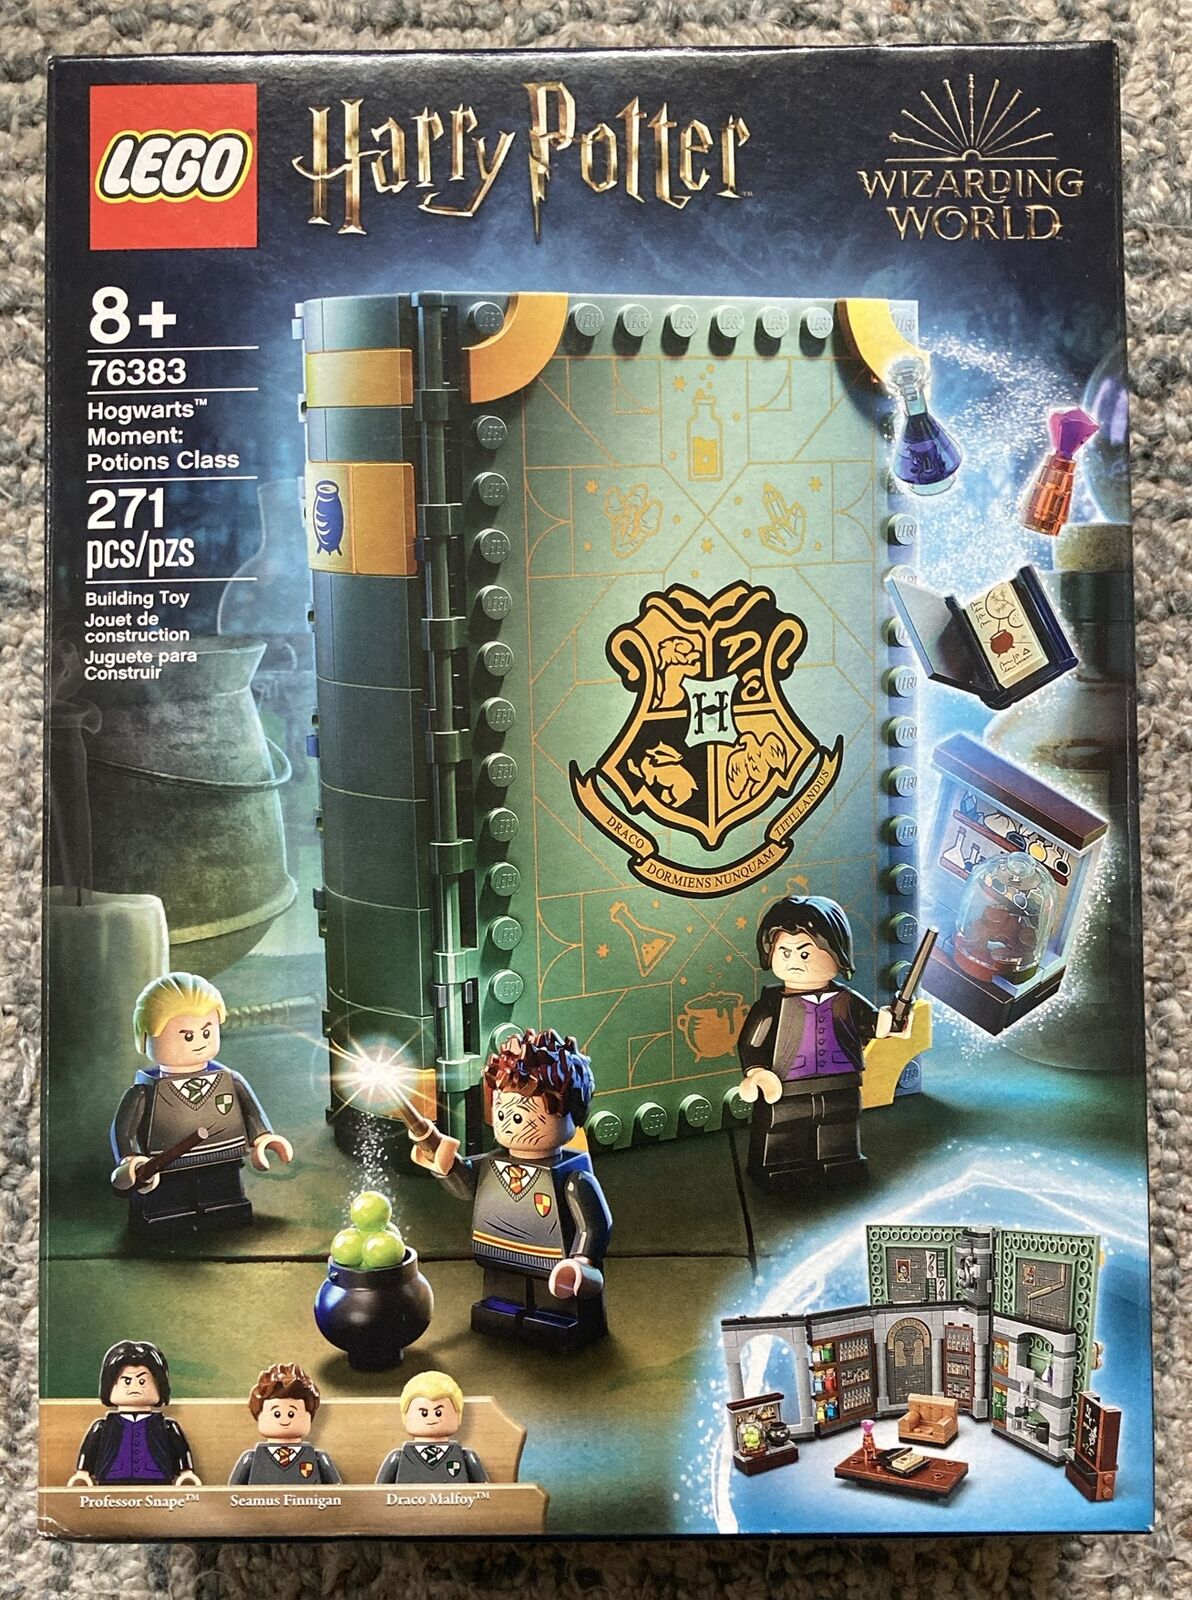 New Sealed Retired LEGO Harry Potter 76383 Hogwarts Moment Potions Class 271pcs